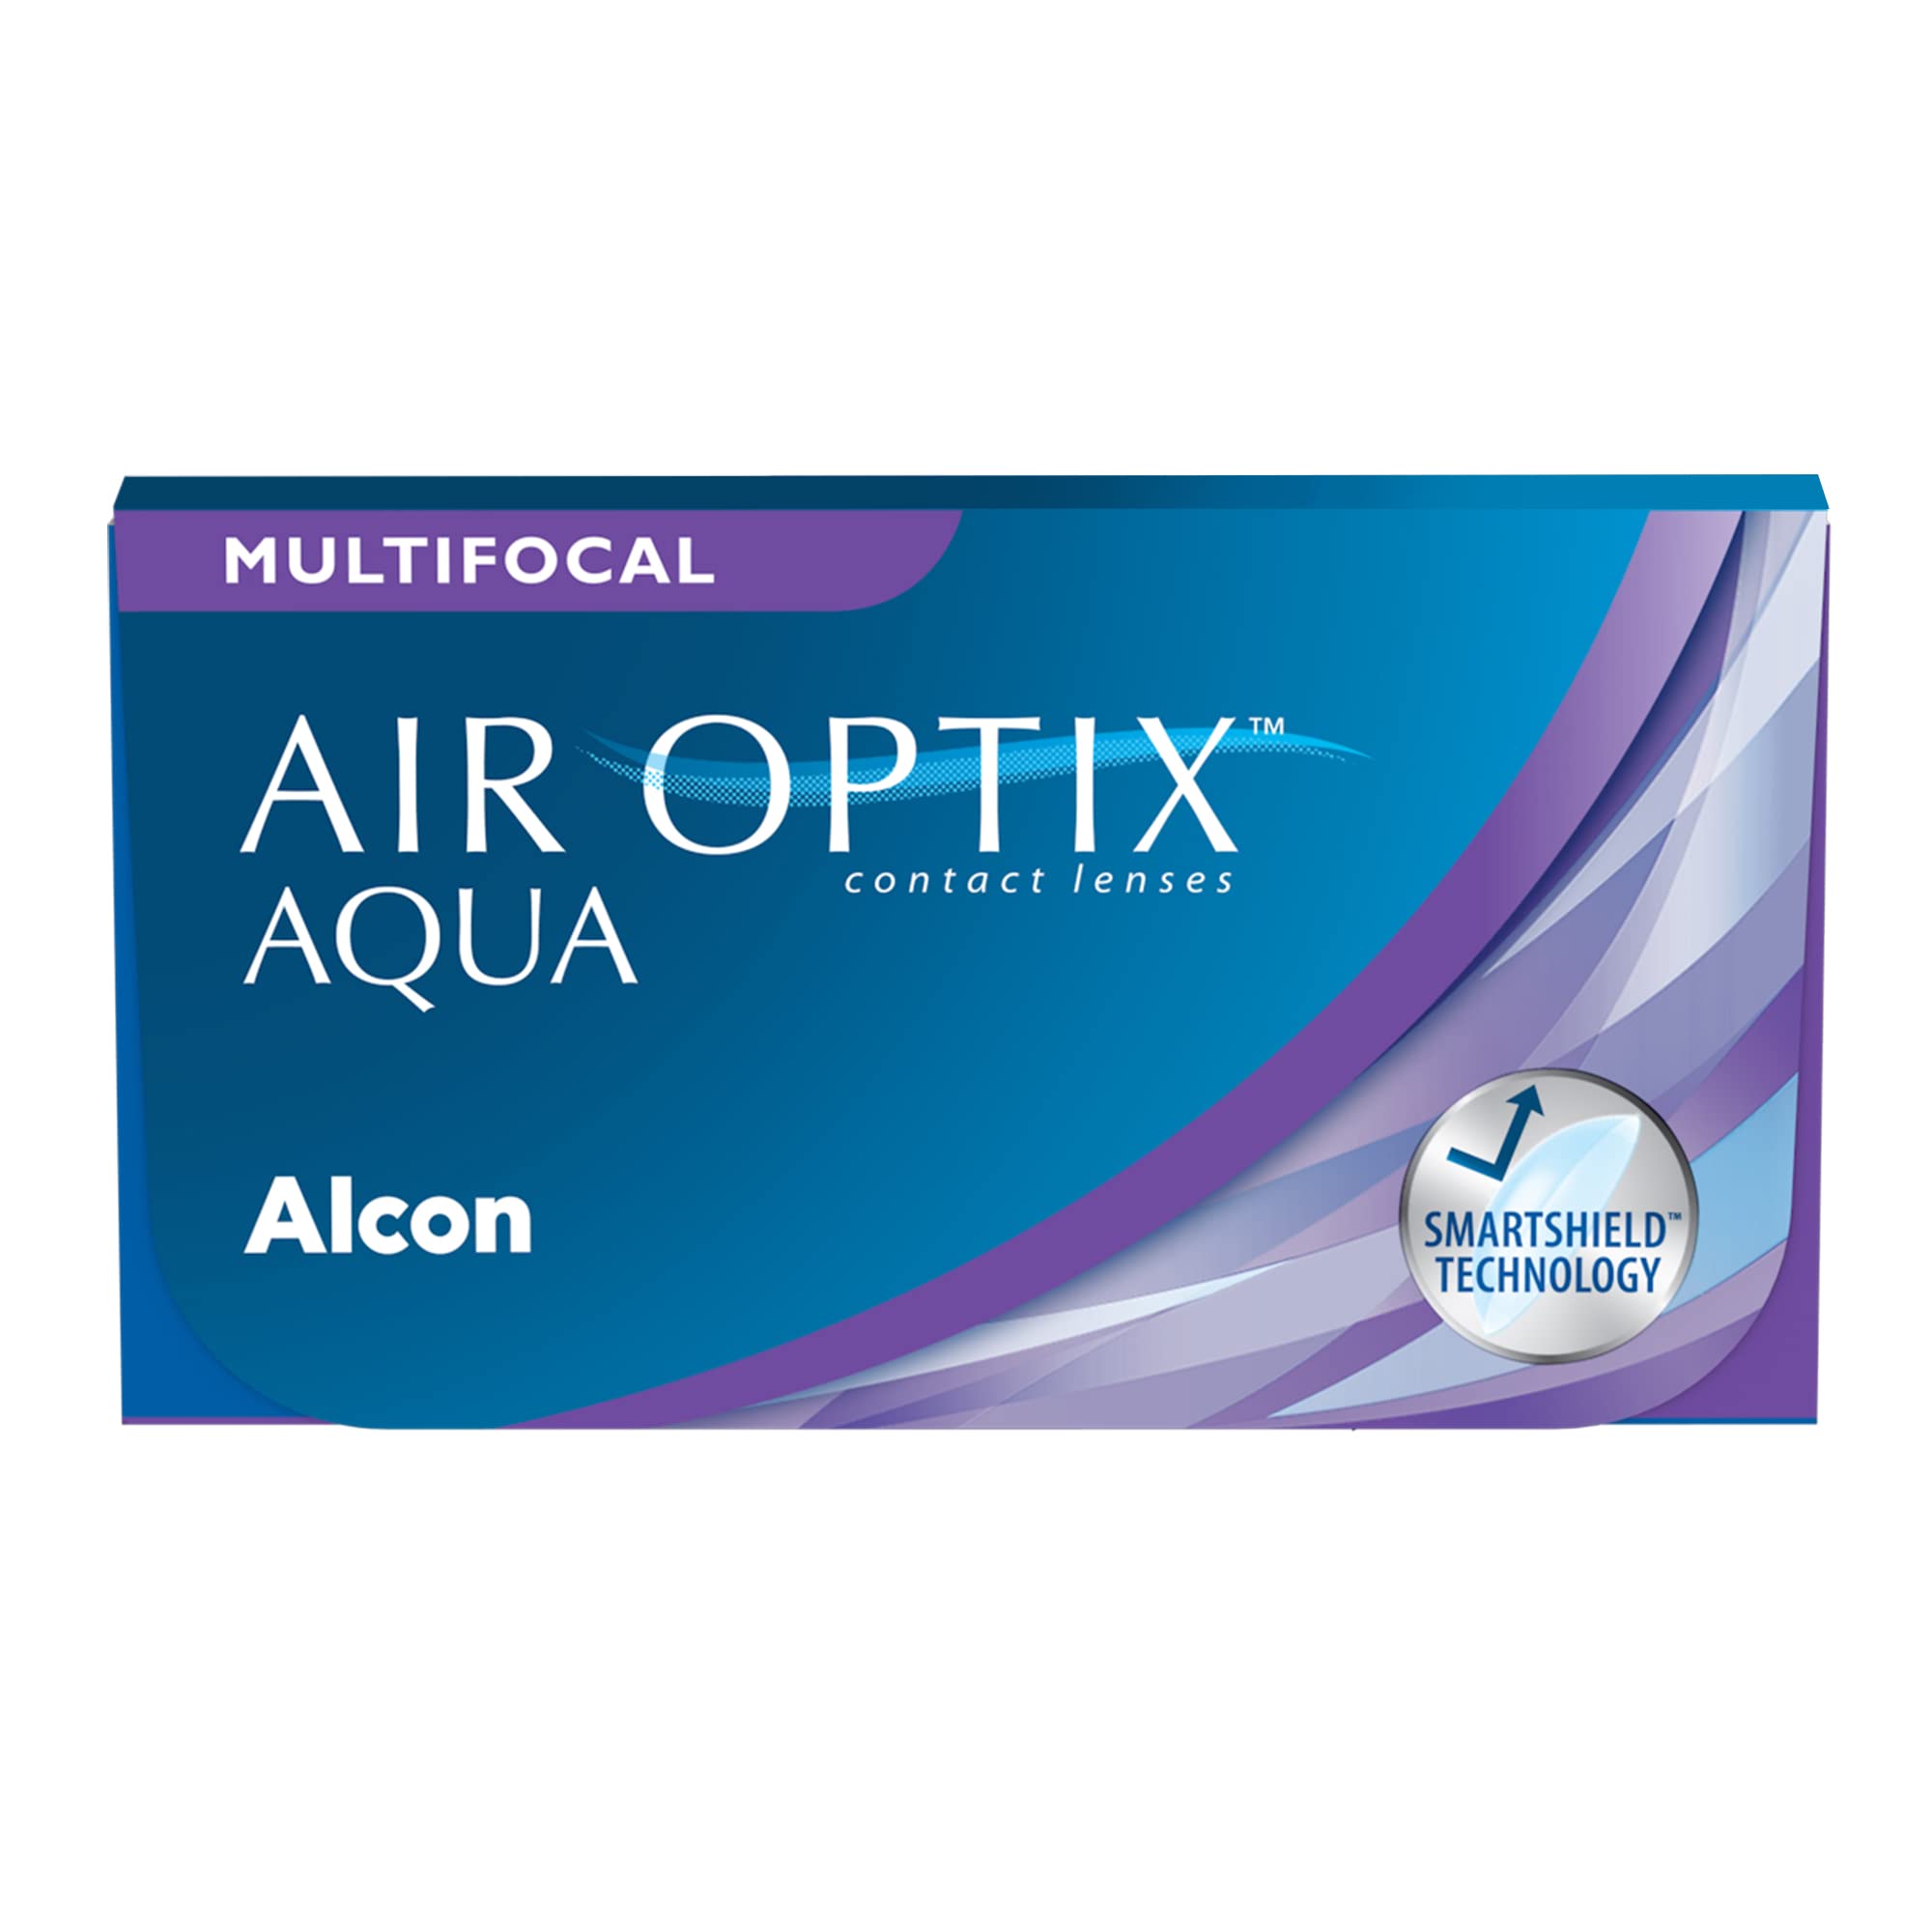 Air Optix Aqua Multifocal Monatslinsen weich, 6 Stück, BC 8.6 mm, DIA 14.2 mm, ADD MED, -4,00 Dioptrien